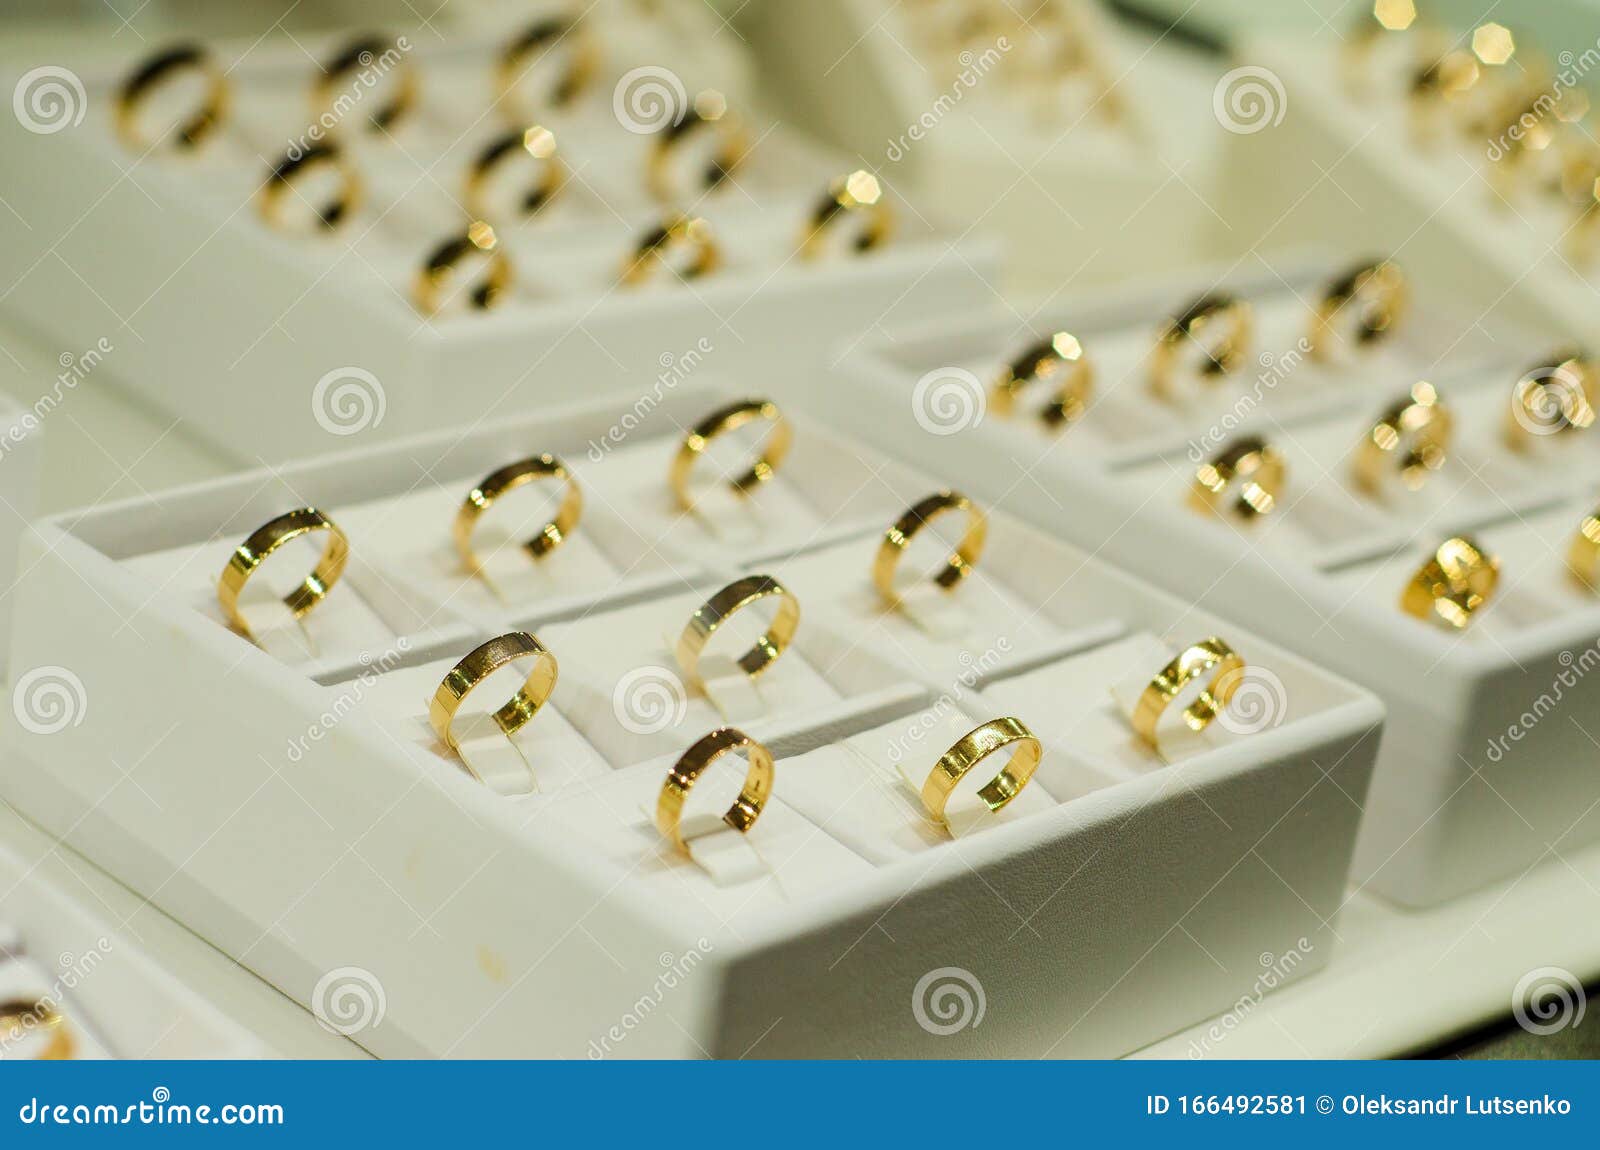 Dubai Gold Souk Jewelery Ring Market Stock Photo 666703888 | Shutterstock